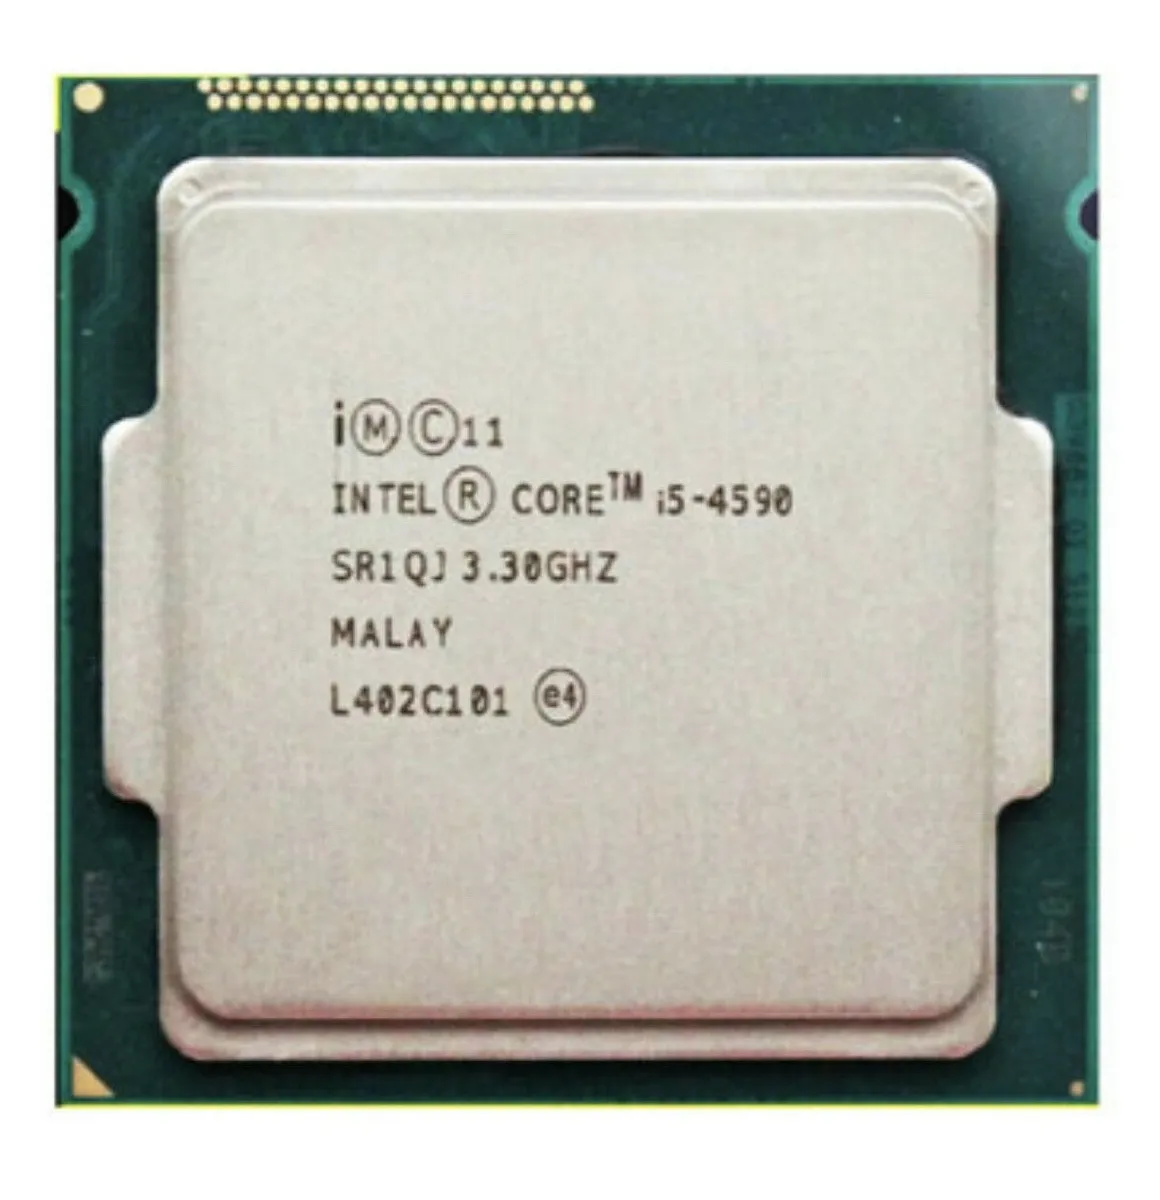 Arabisch Overvloed Blijven Intel Core i5-4590 Quad-Core 3.30GHz CPU Processor SR1QJ CPU LGA1150/Socket  H3 735858278461 | eBay